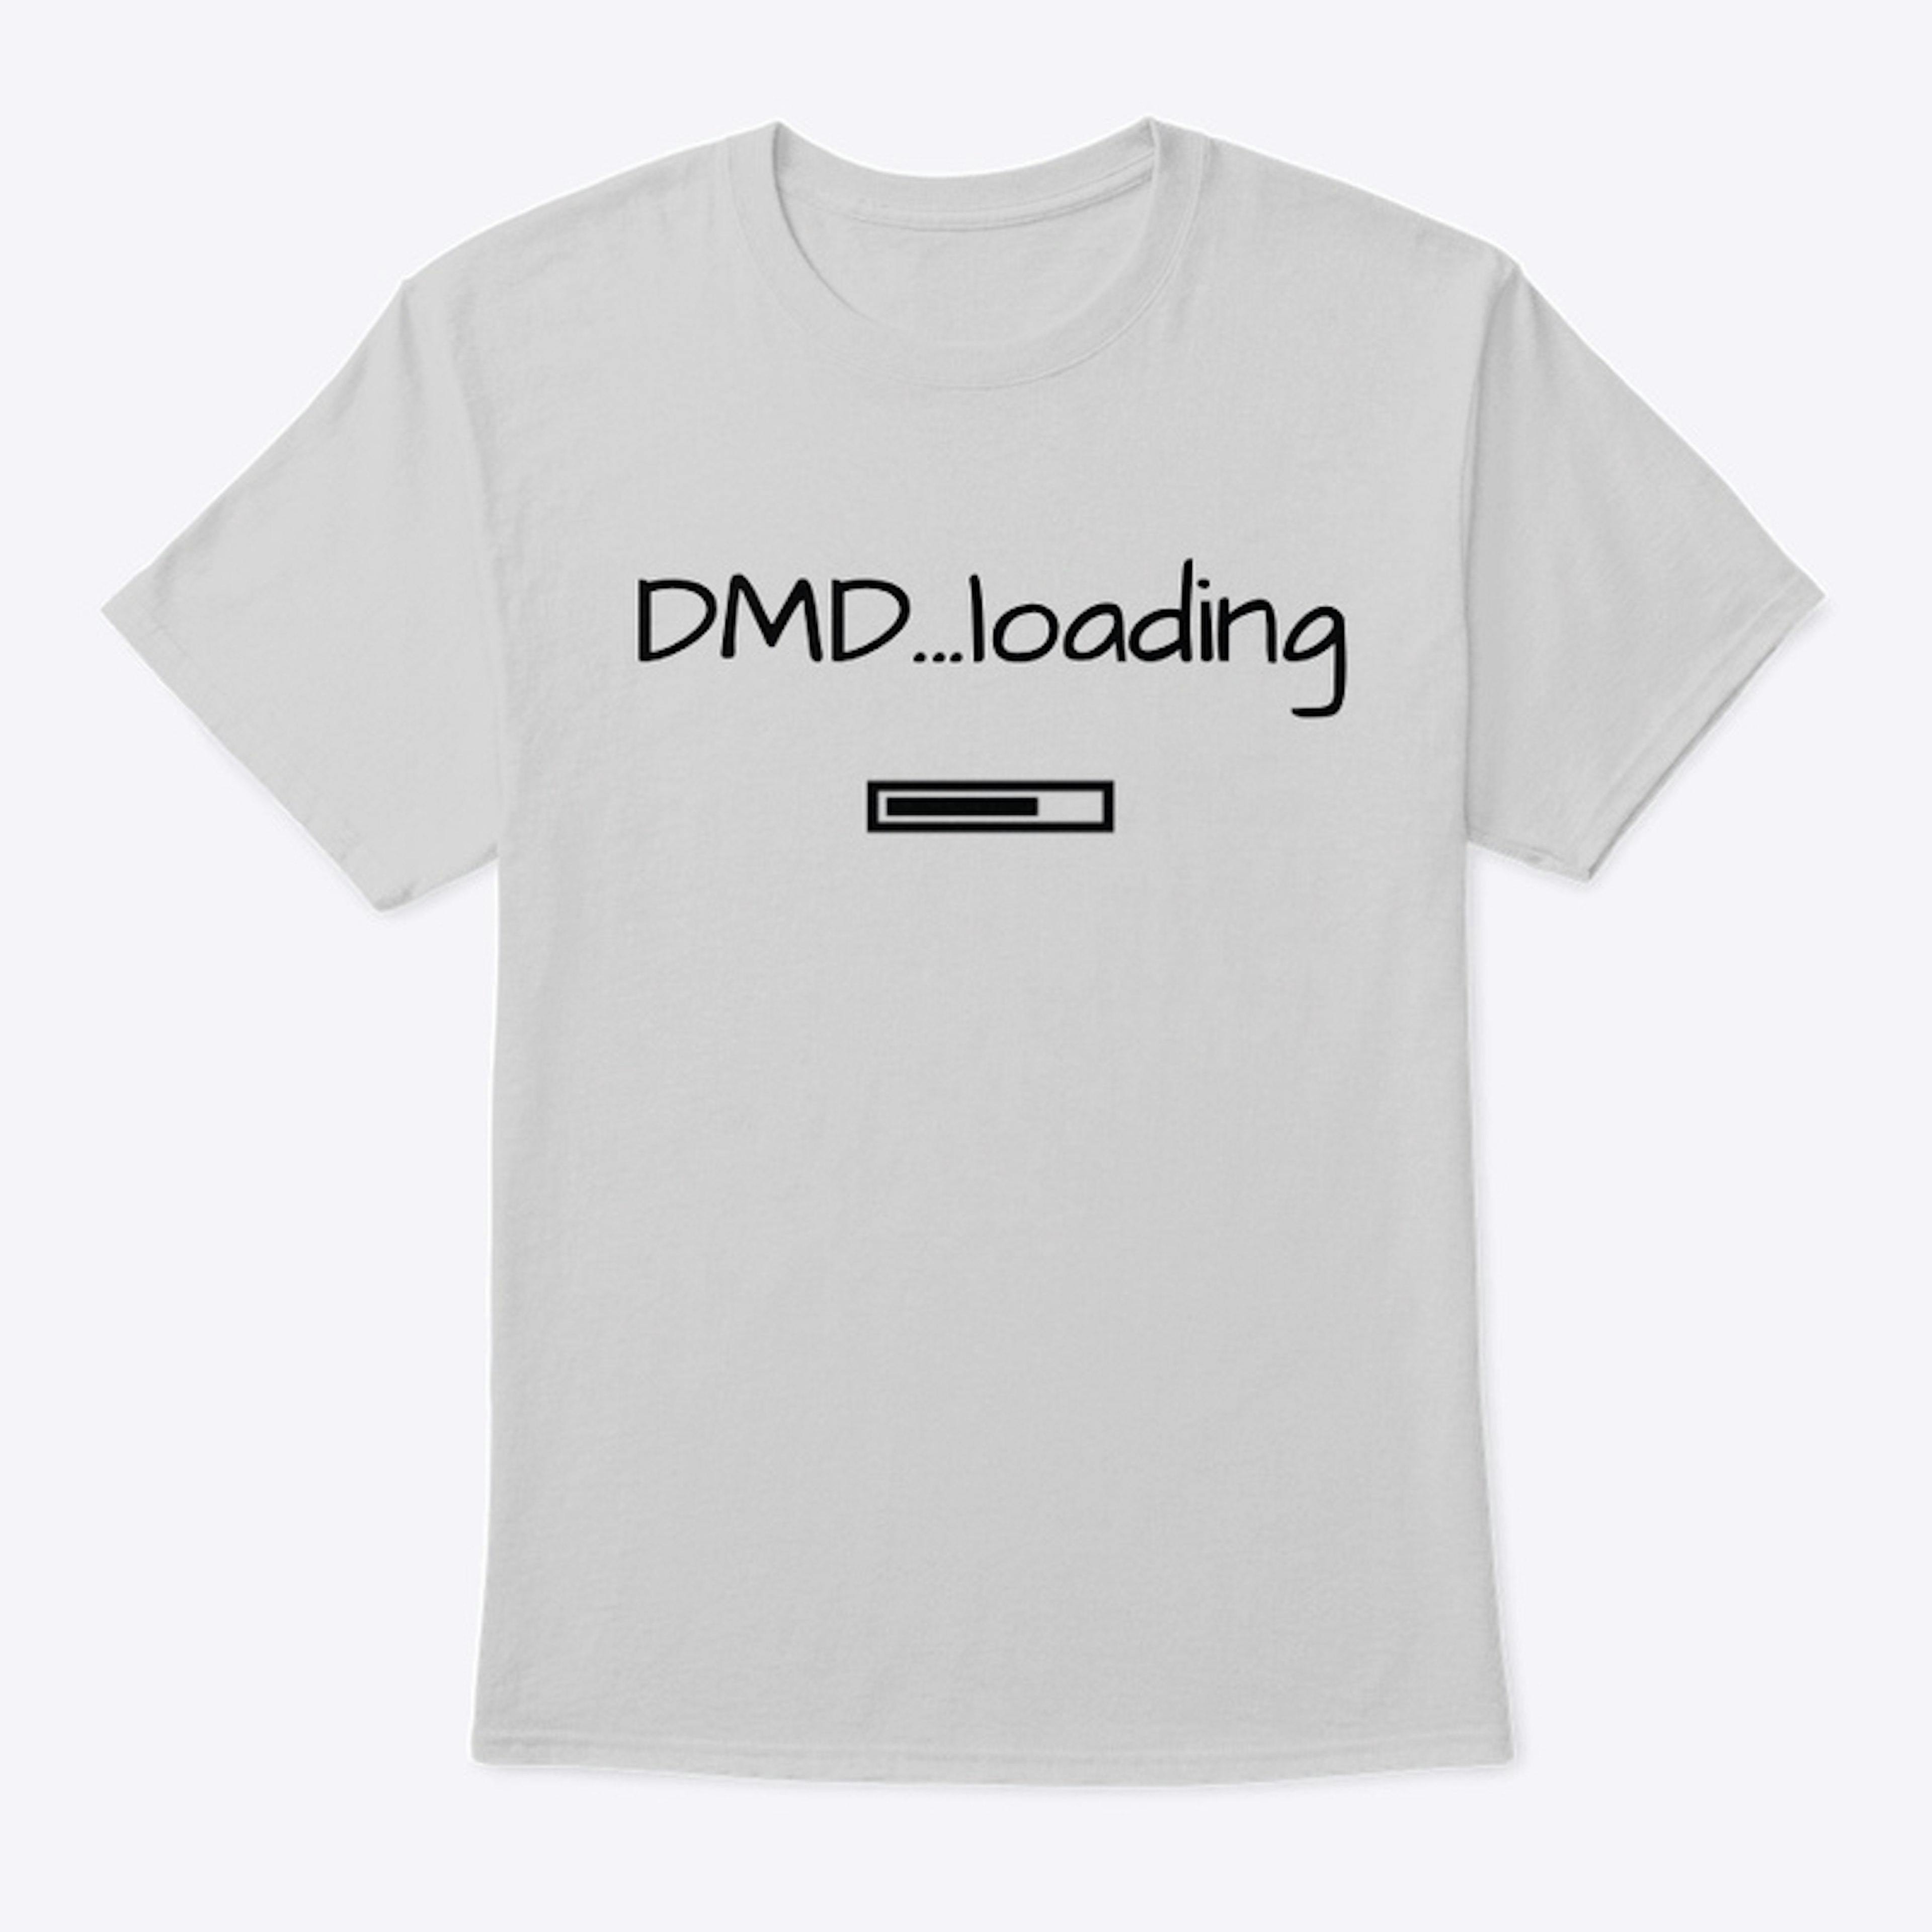 DMD loading Shirt